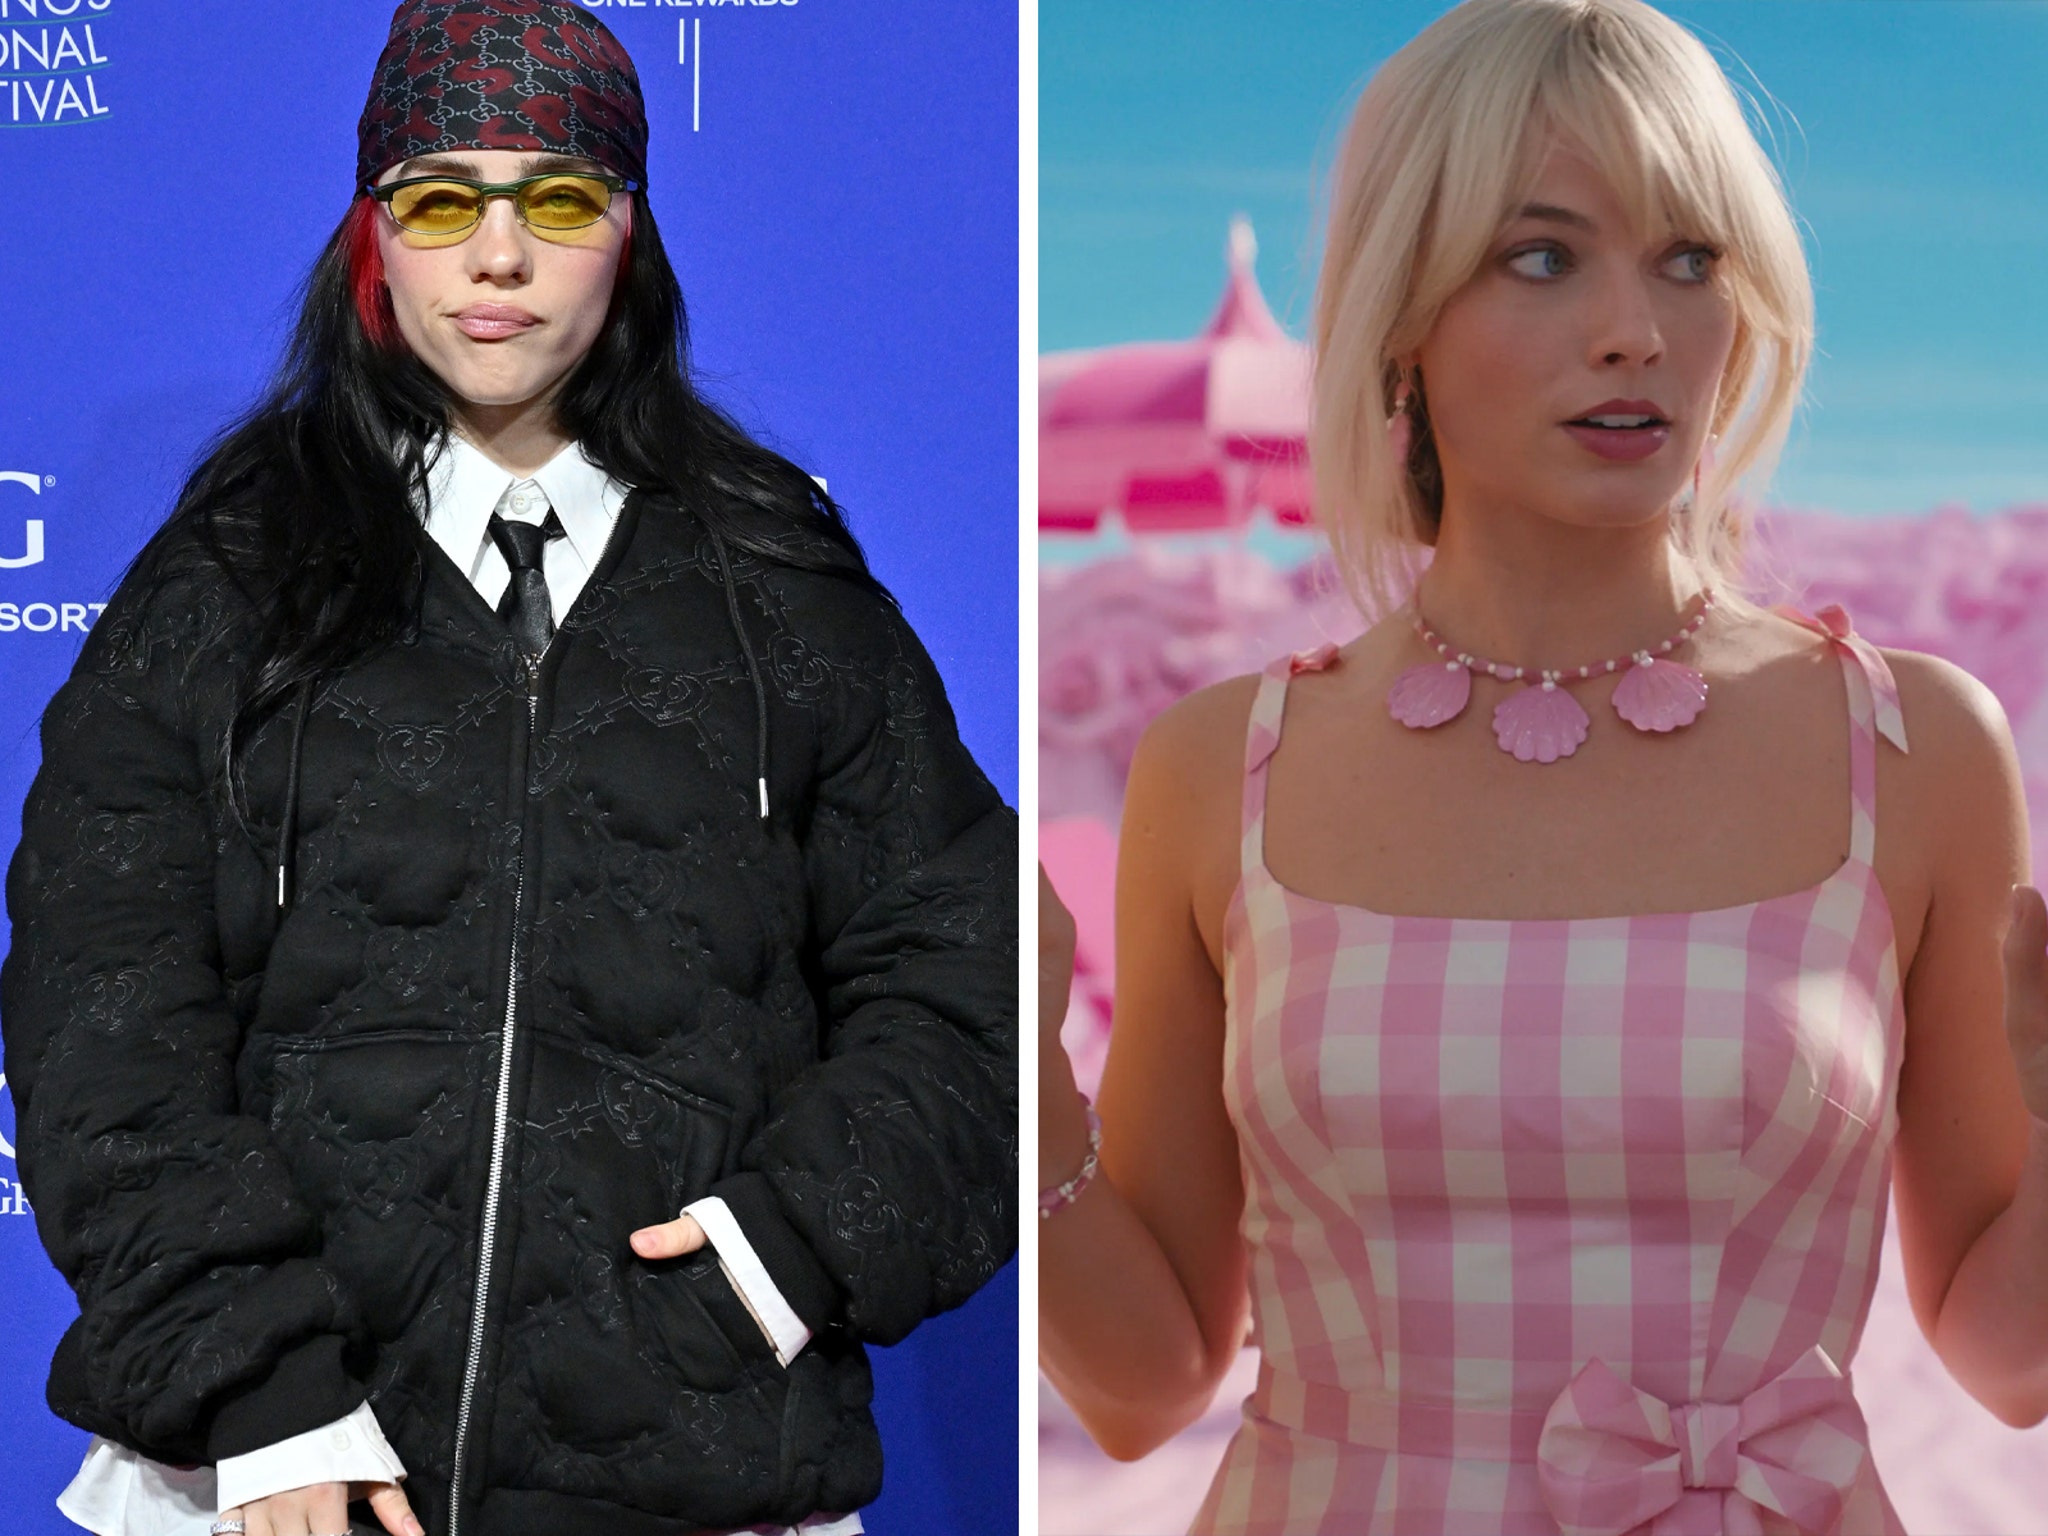 Billie Eilish: Singer dedicates award for Barbie song to people struggling  emotionally